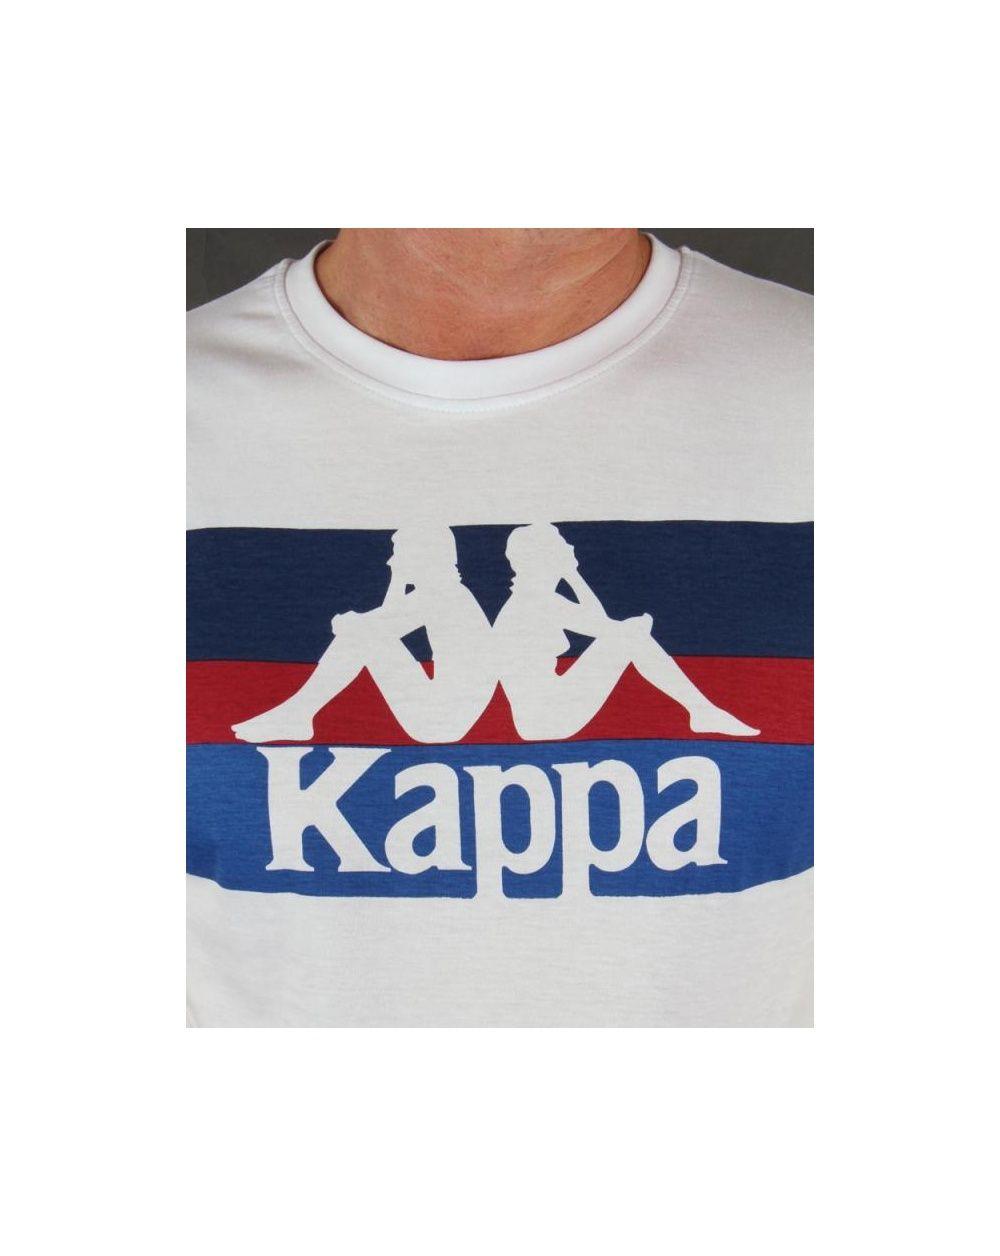 Red and White Kappa Logo - Robe Di Kappa Skippa Logo T-shirt White/blue/red - kappa logo ...